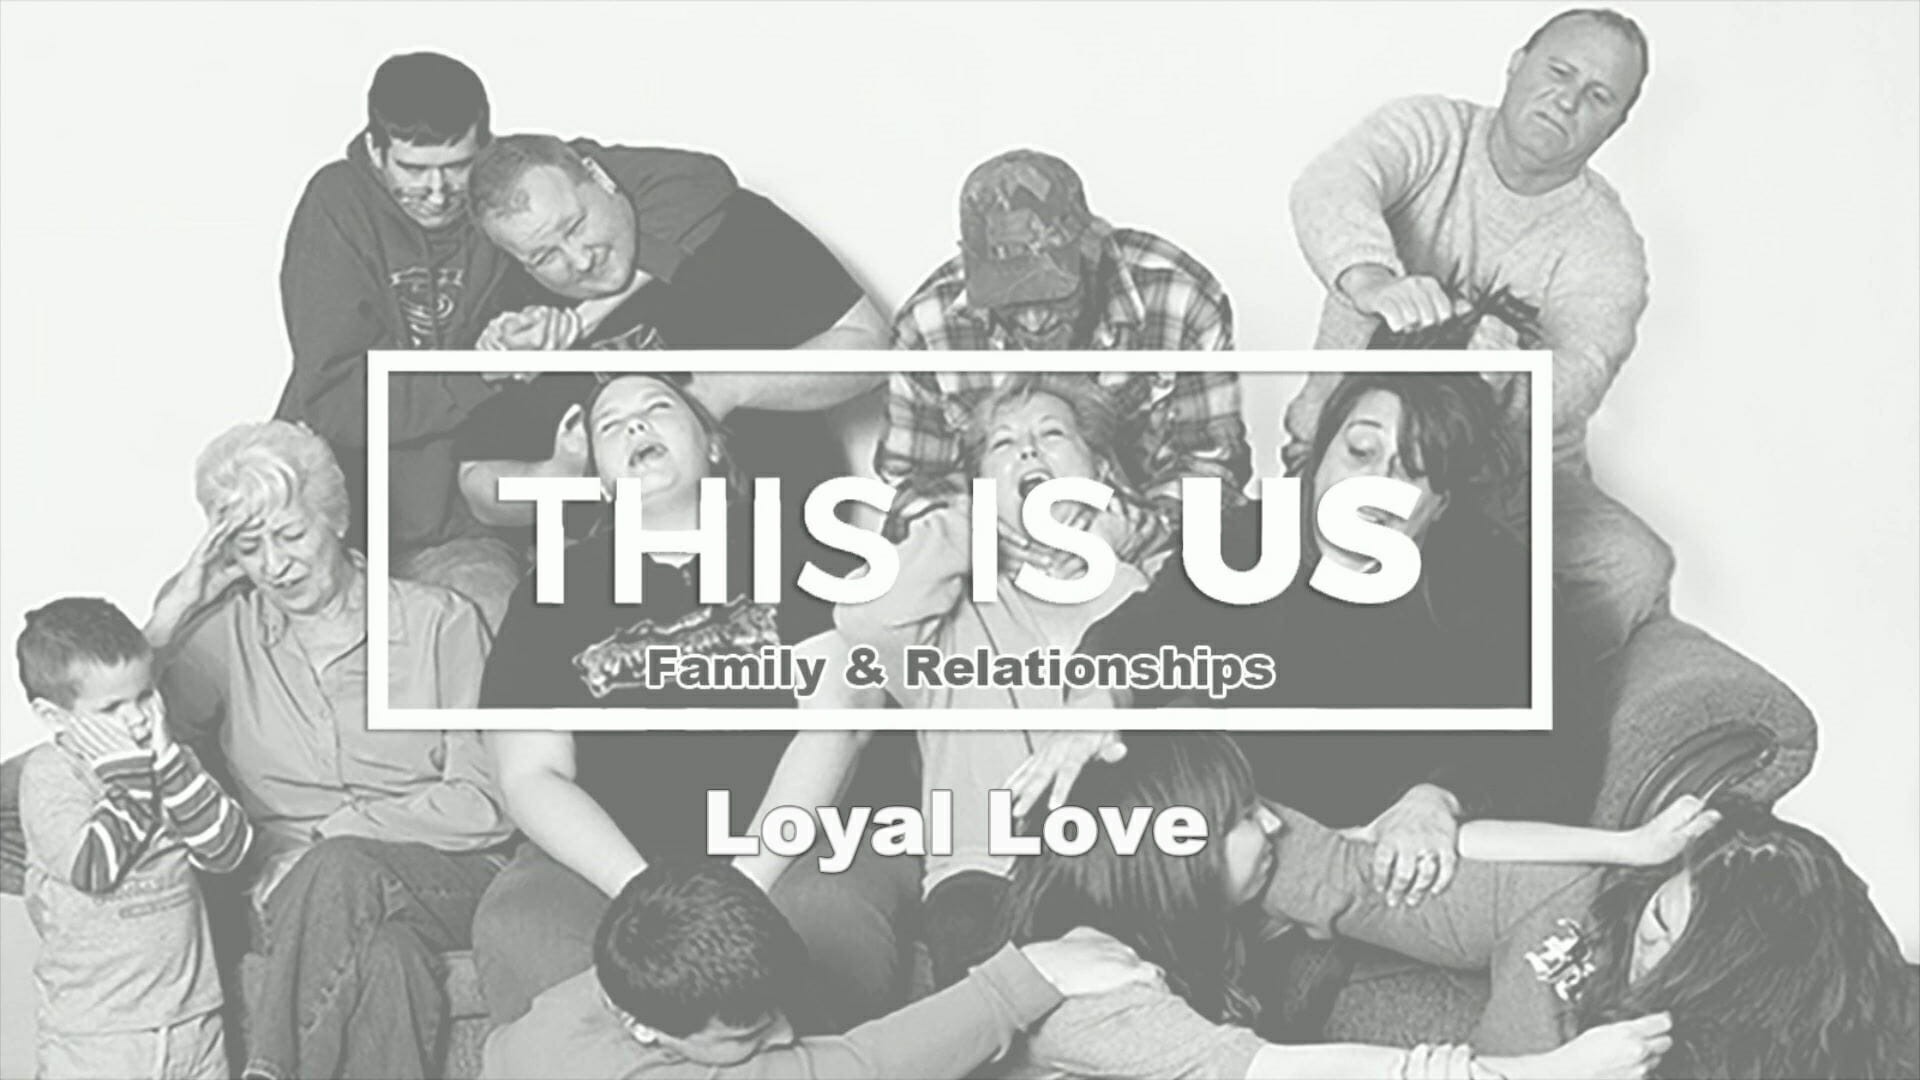 “Loyal Love”